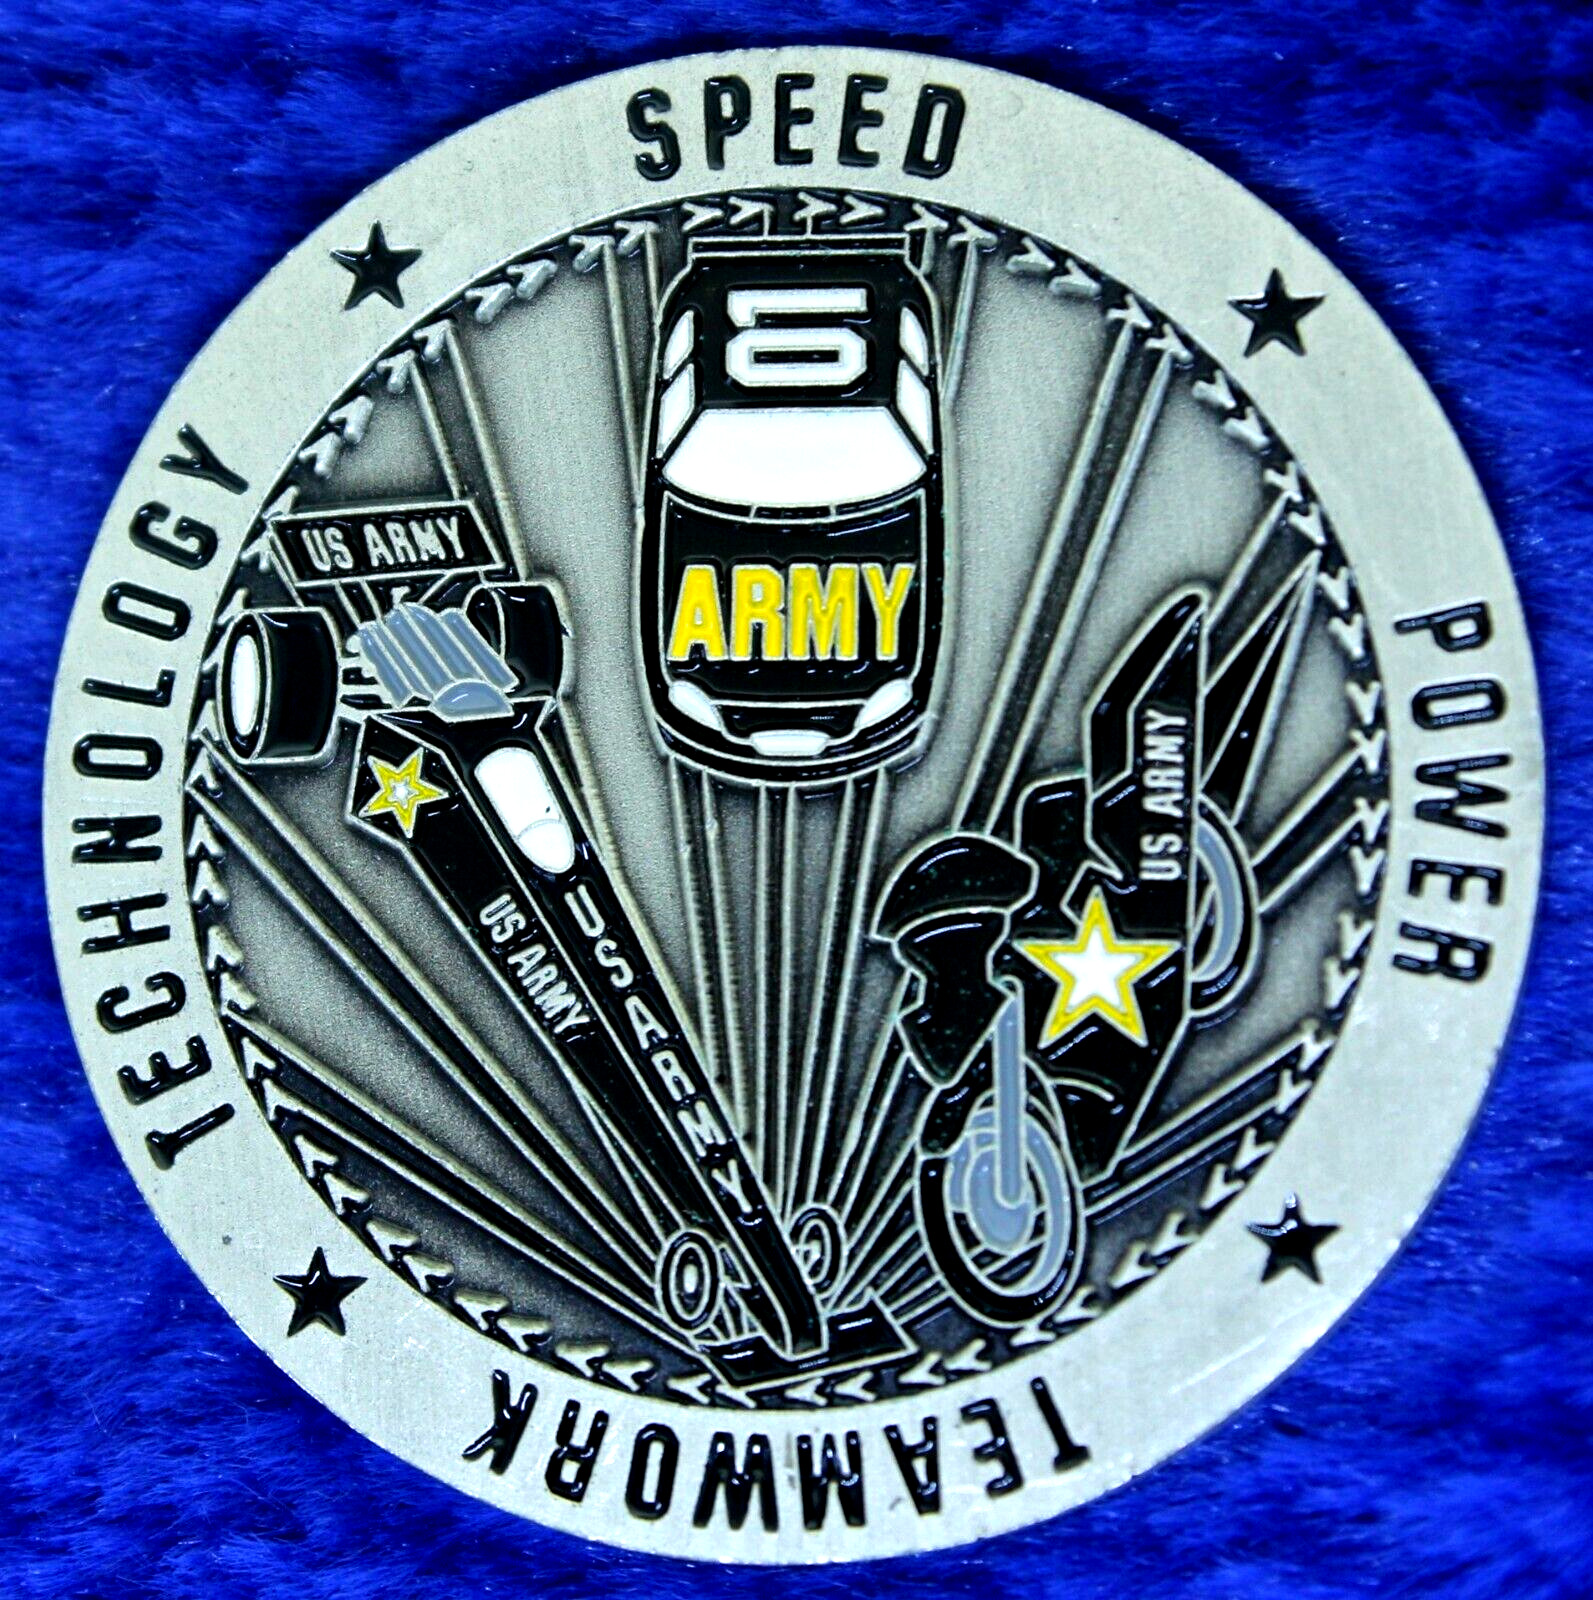 US Army Motorsports 2004 NASCAR Motorcycle Racing NHRA Top Challenge Coin PT-3